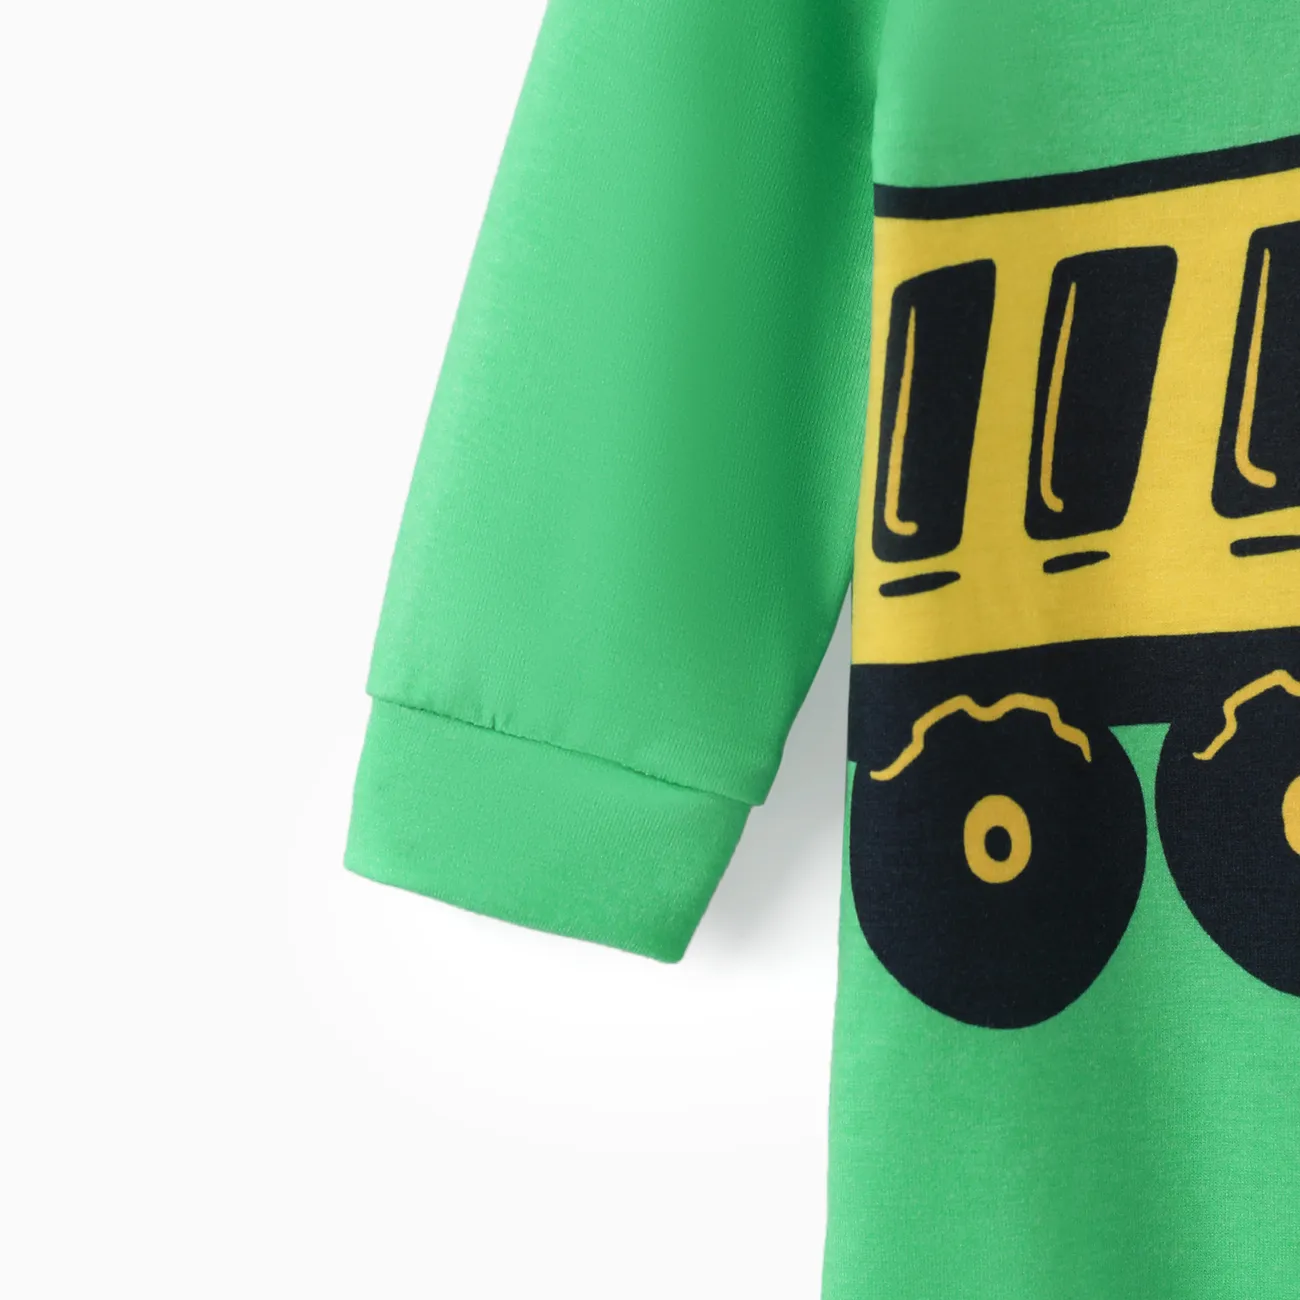 Naia™ Baby Boy Allover Construction Vehicle Print Long-sleeve Jumpsuit Green big image 1